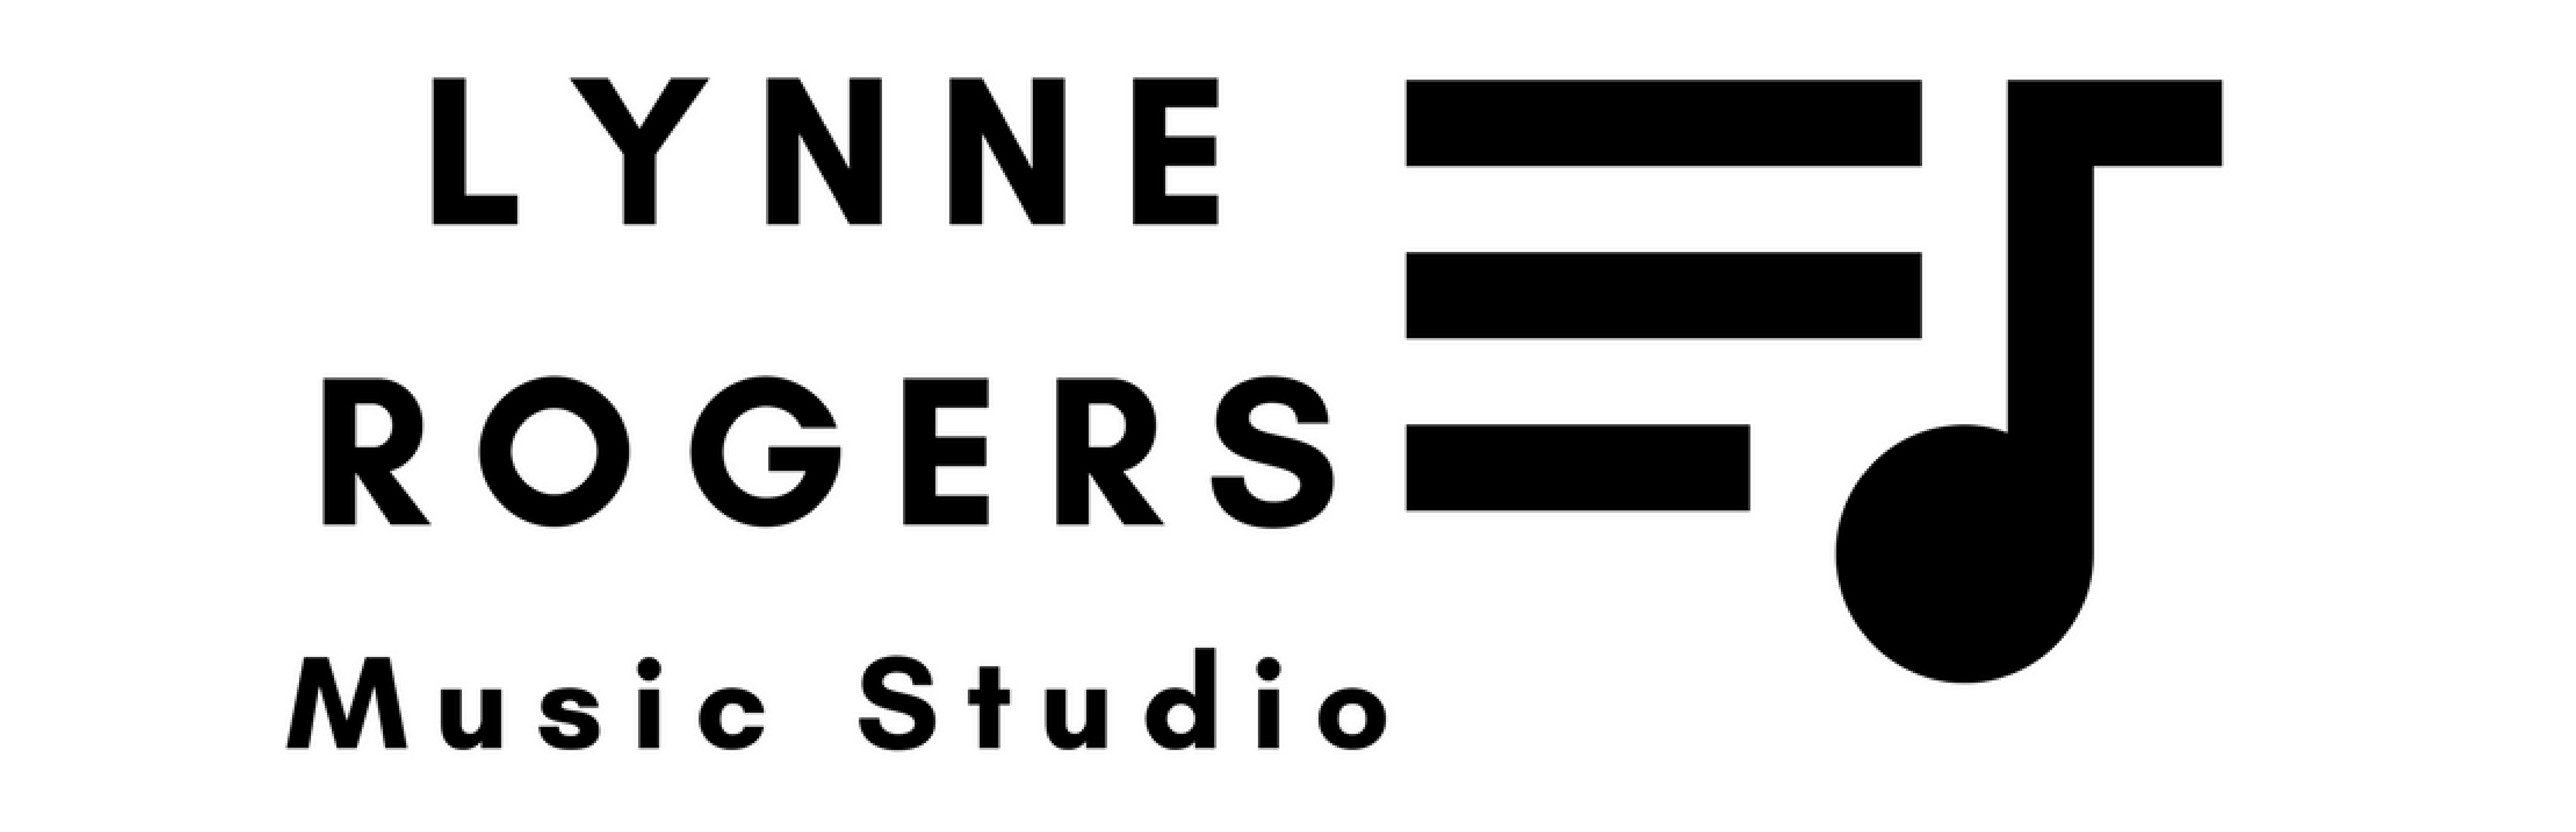 Lynne Rogers Music Studio